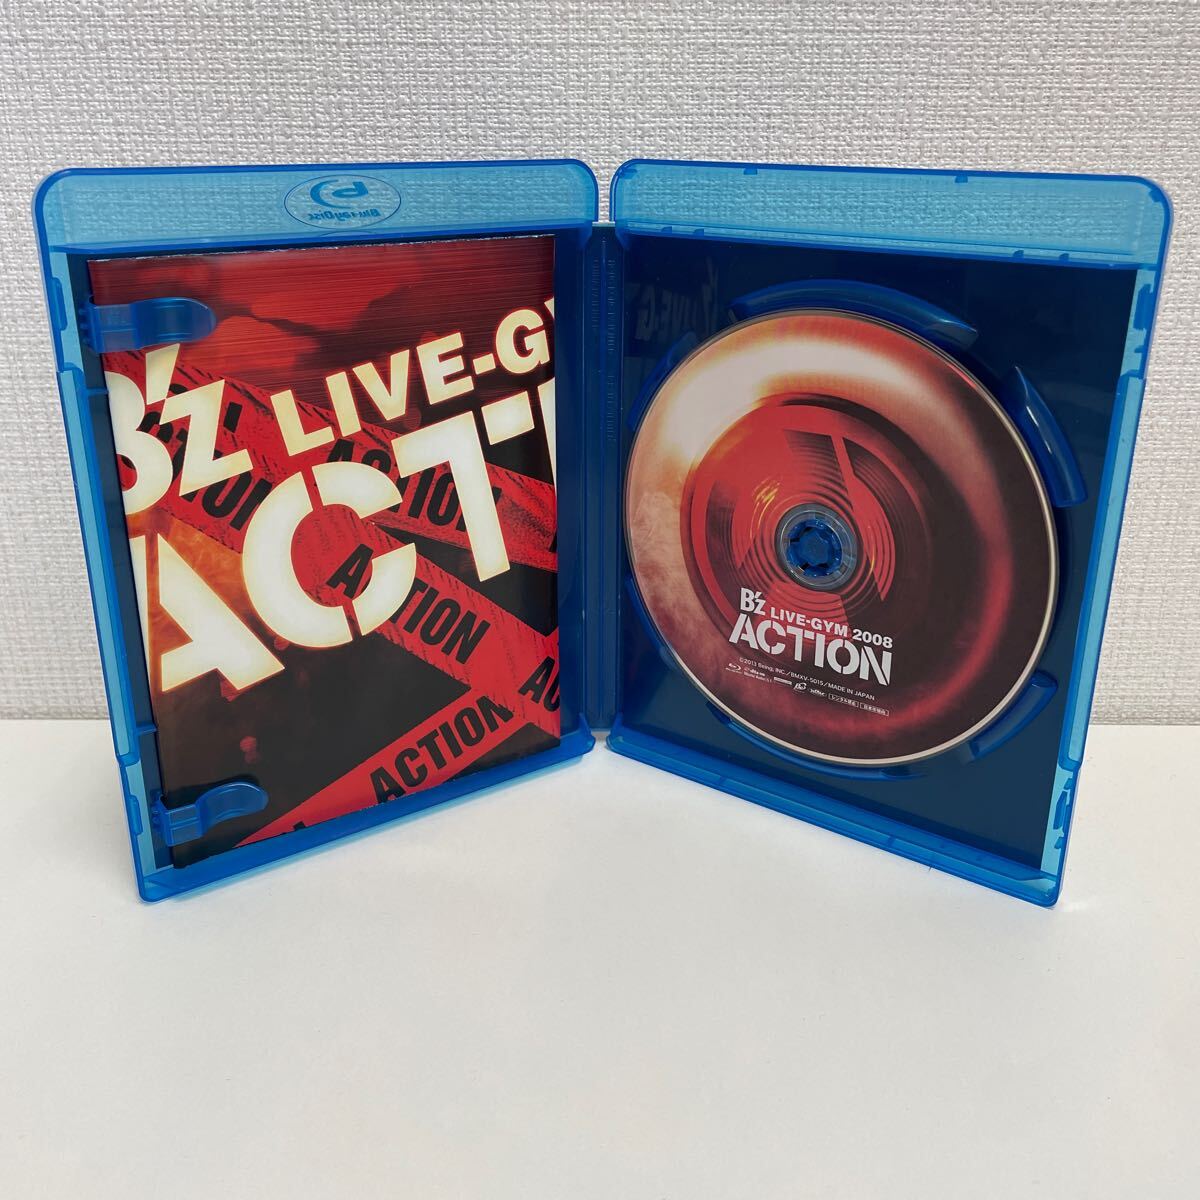 [1 jpy start ] B*z LIVE-GYM 2008 -ACTION- Blu-ray